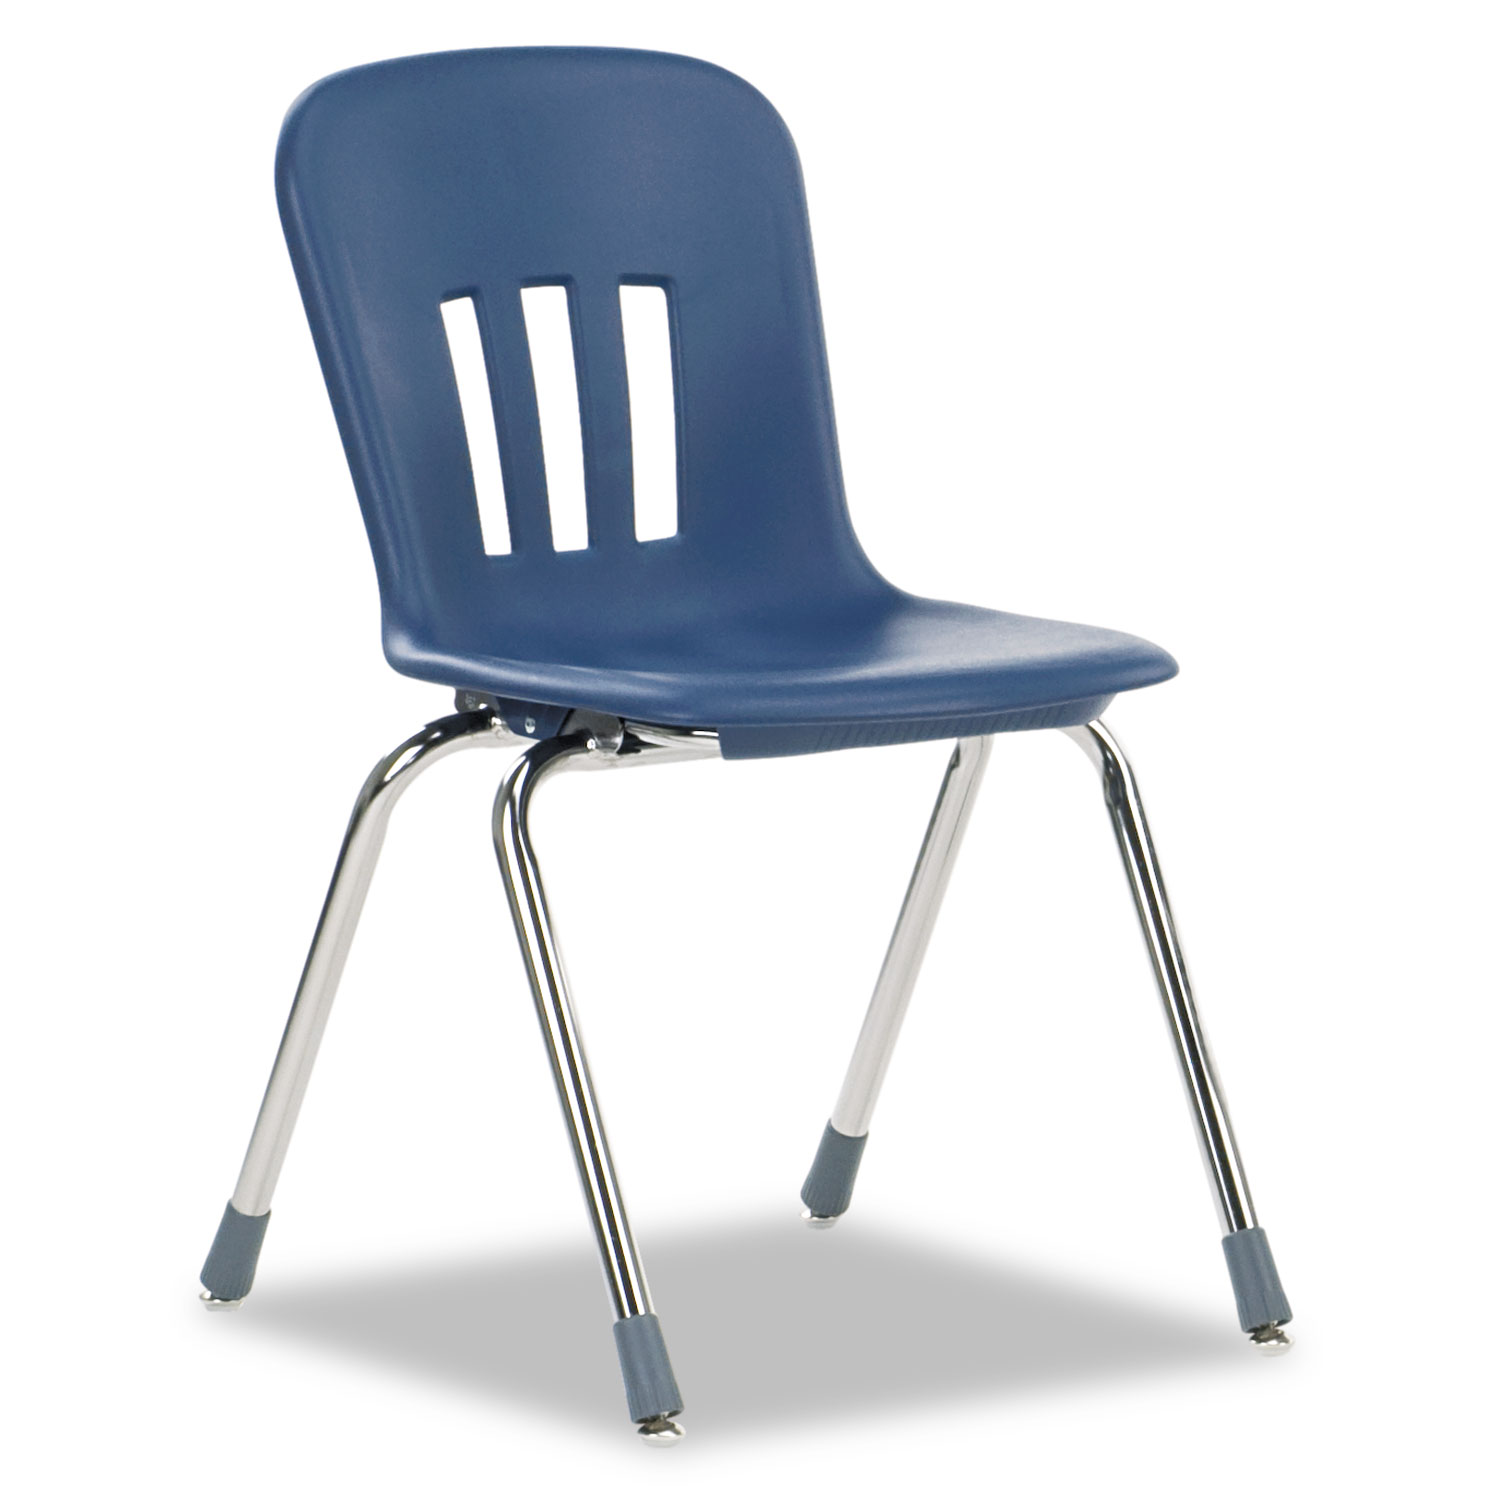 Metaphor Series Classroom Chair, 18 Seat Height, Navy Blue/Chrome, 4/Carton